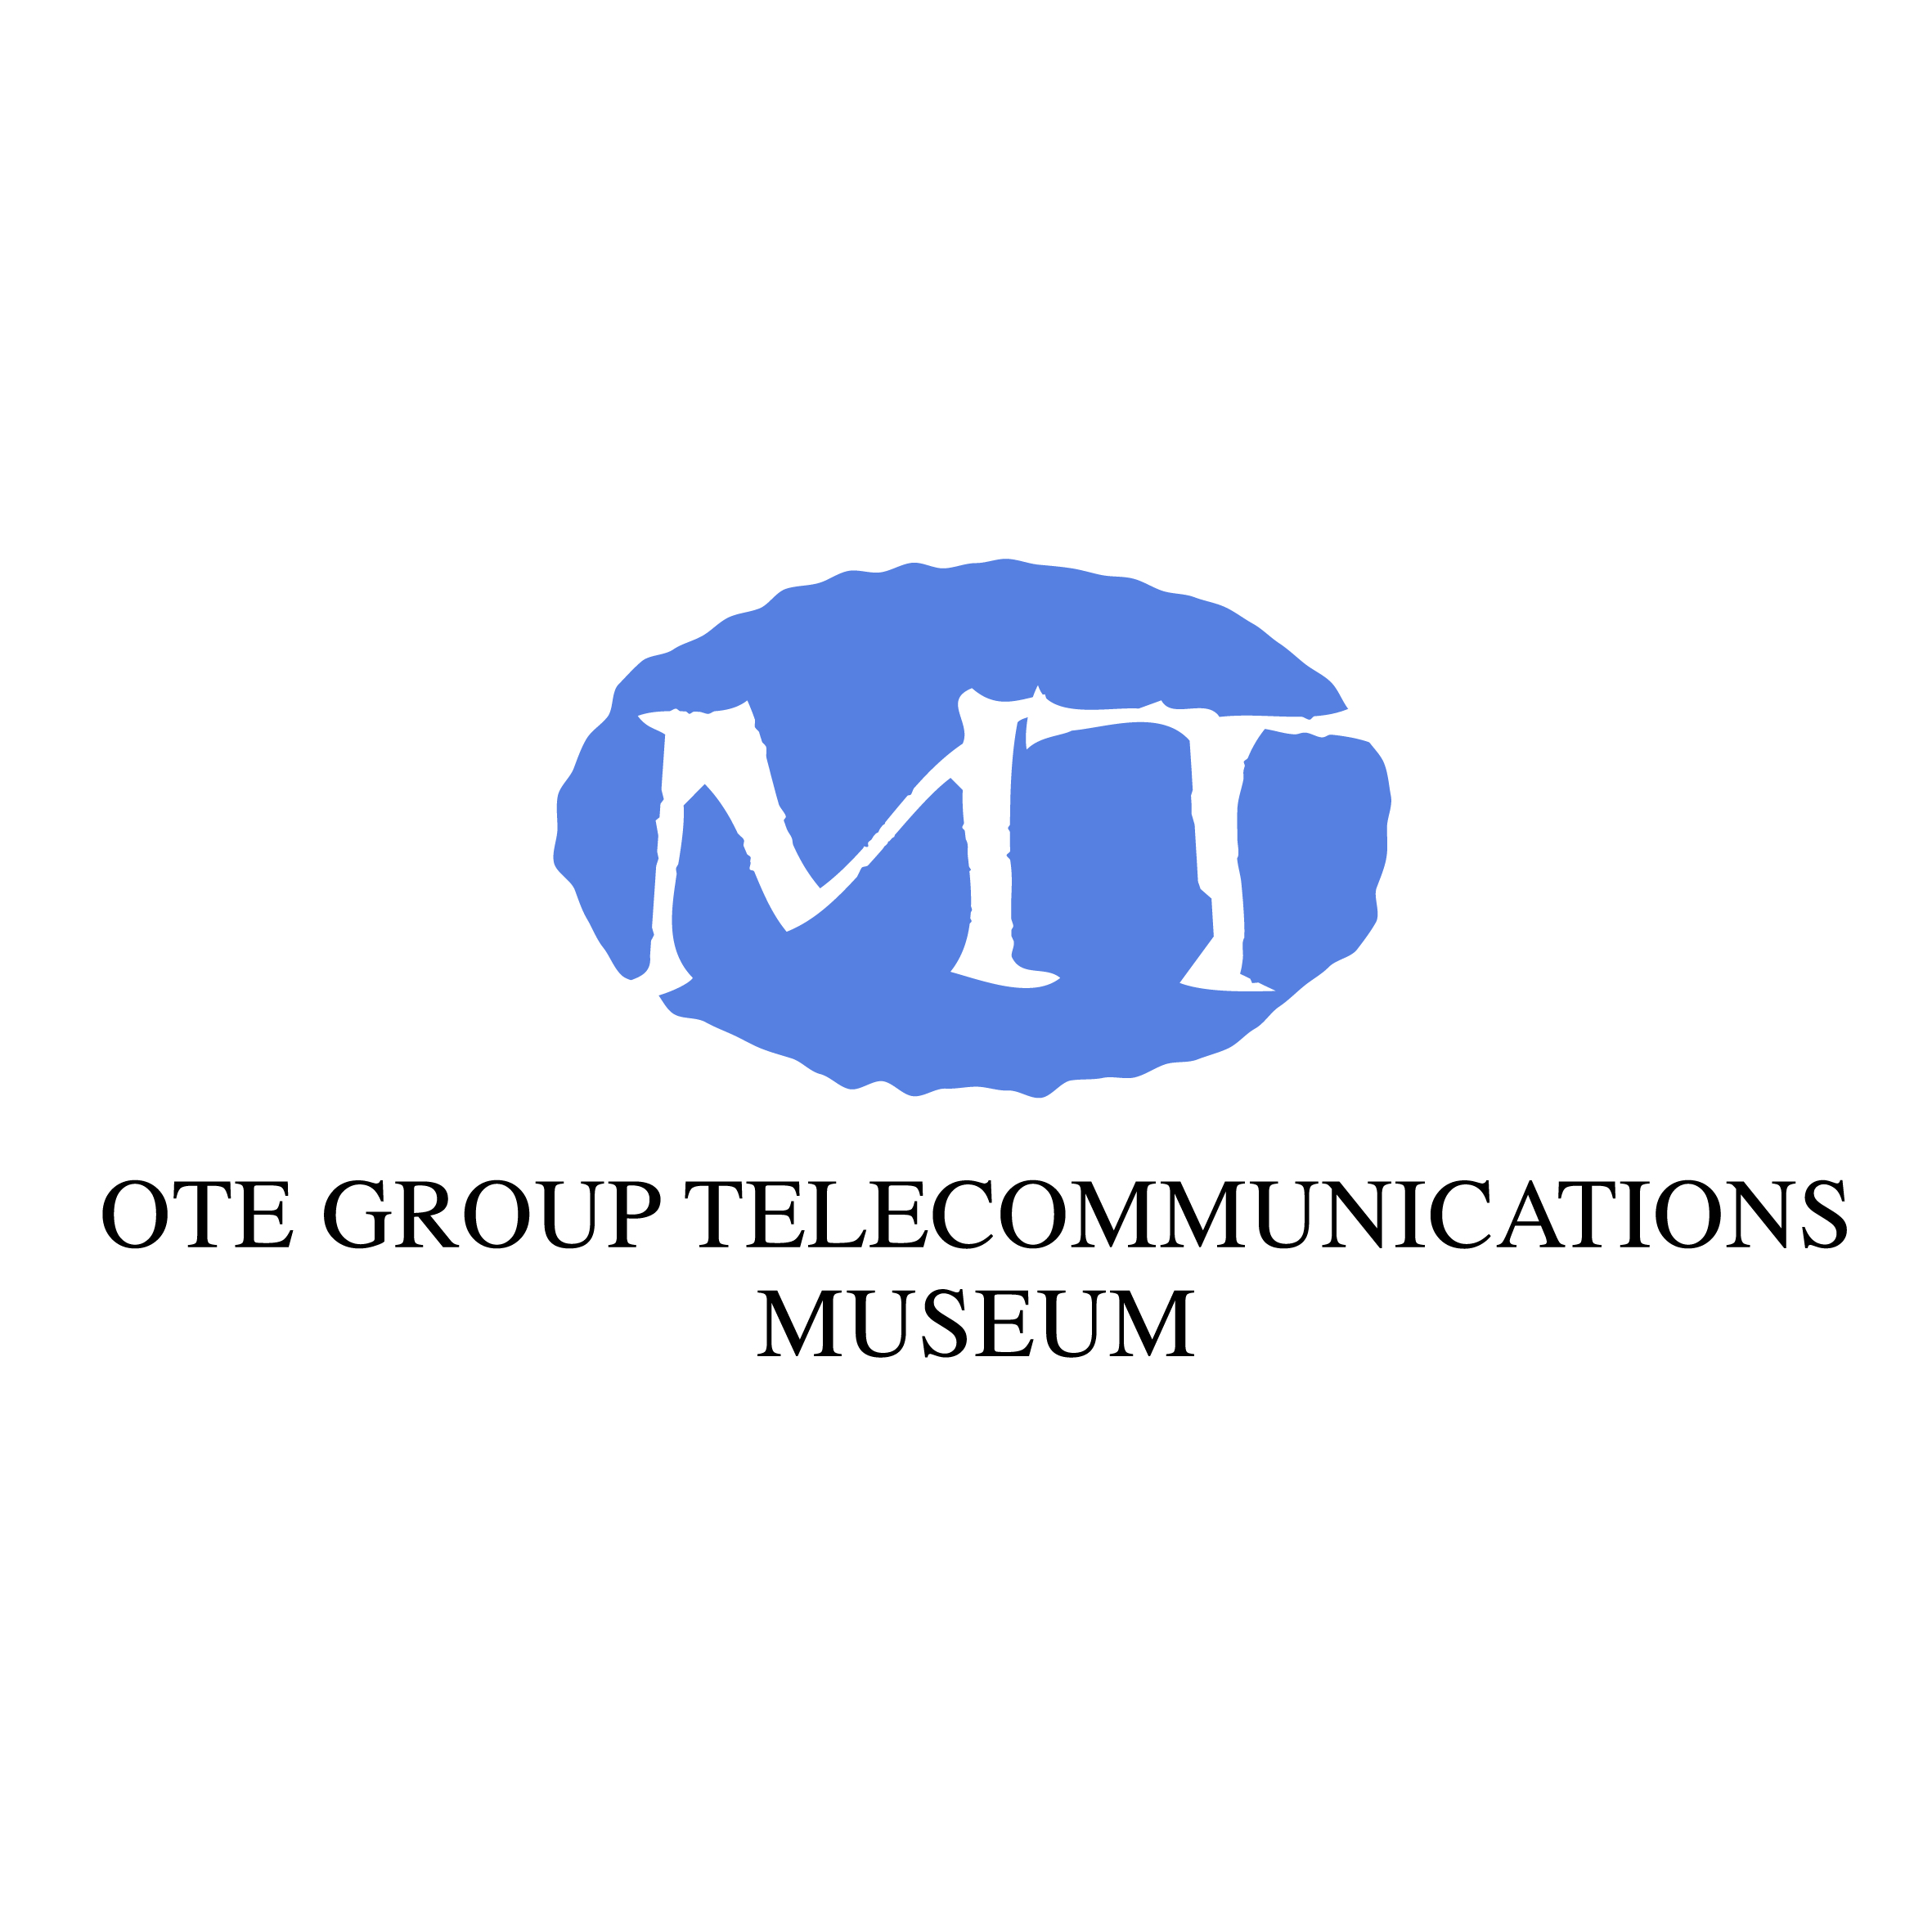 OTE Group Telecommunications Museum